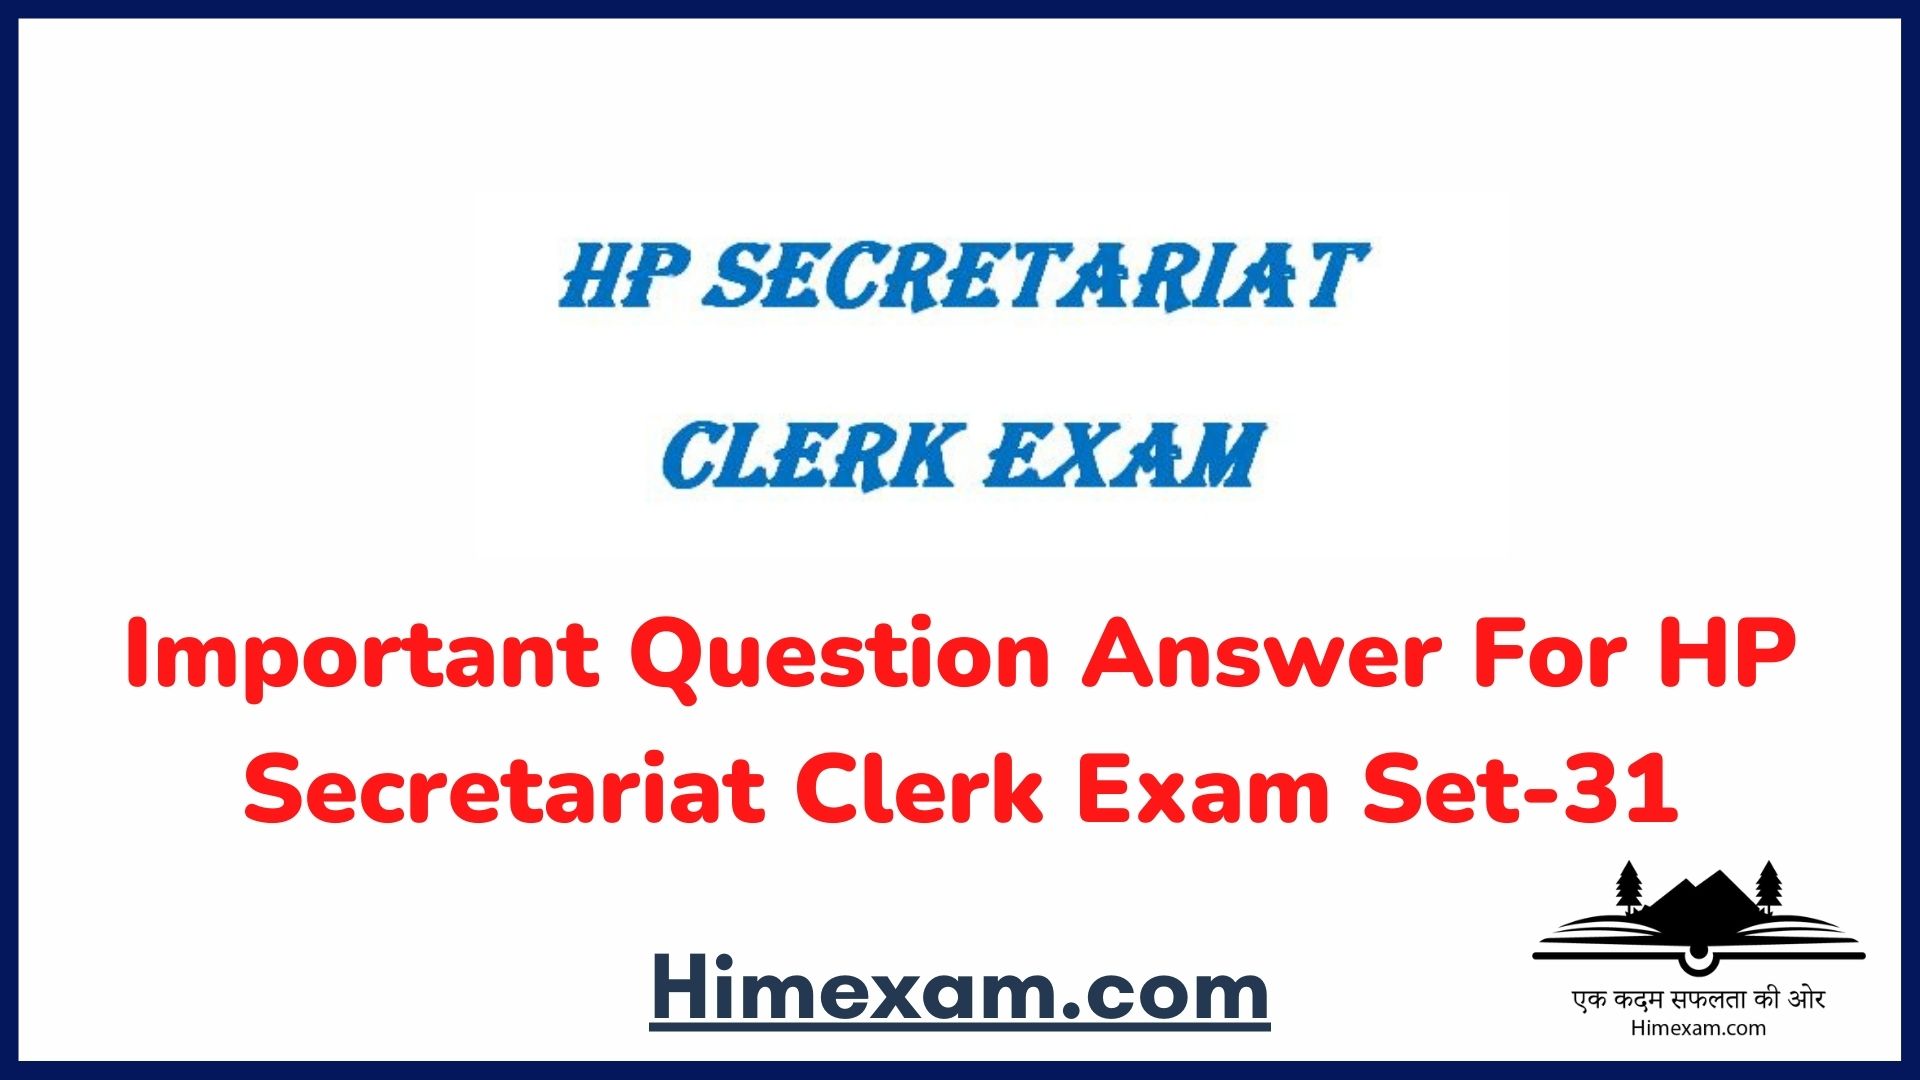 Important Question Answer For HP Secretariat Clerk Exam Set-31